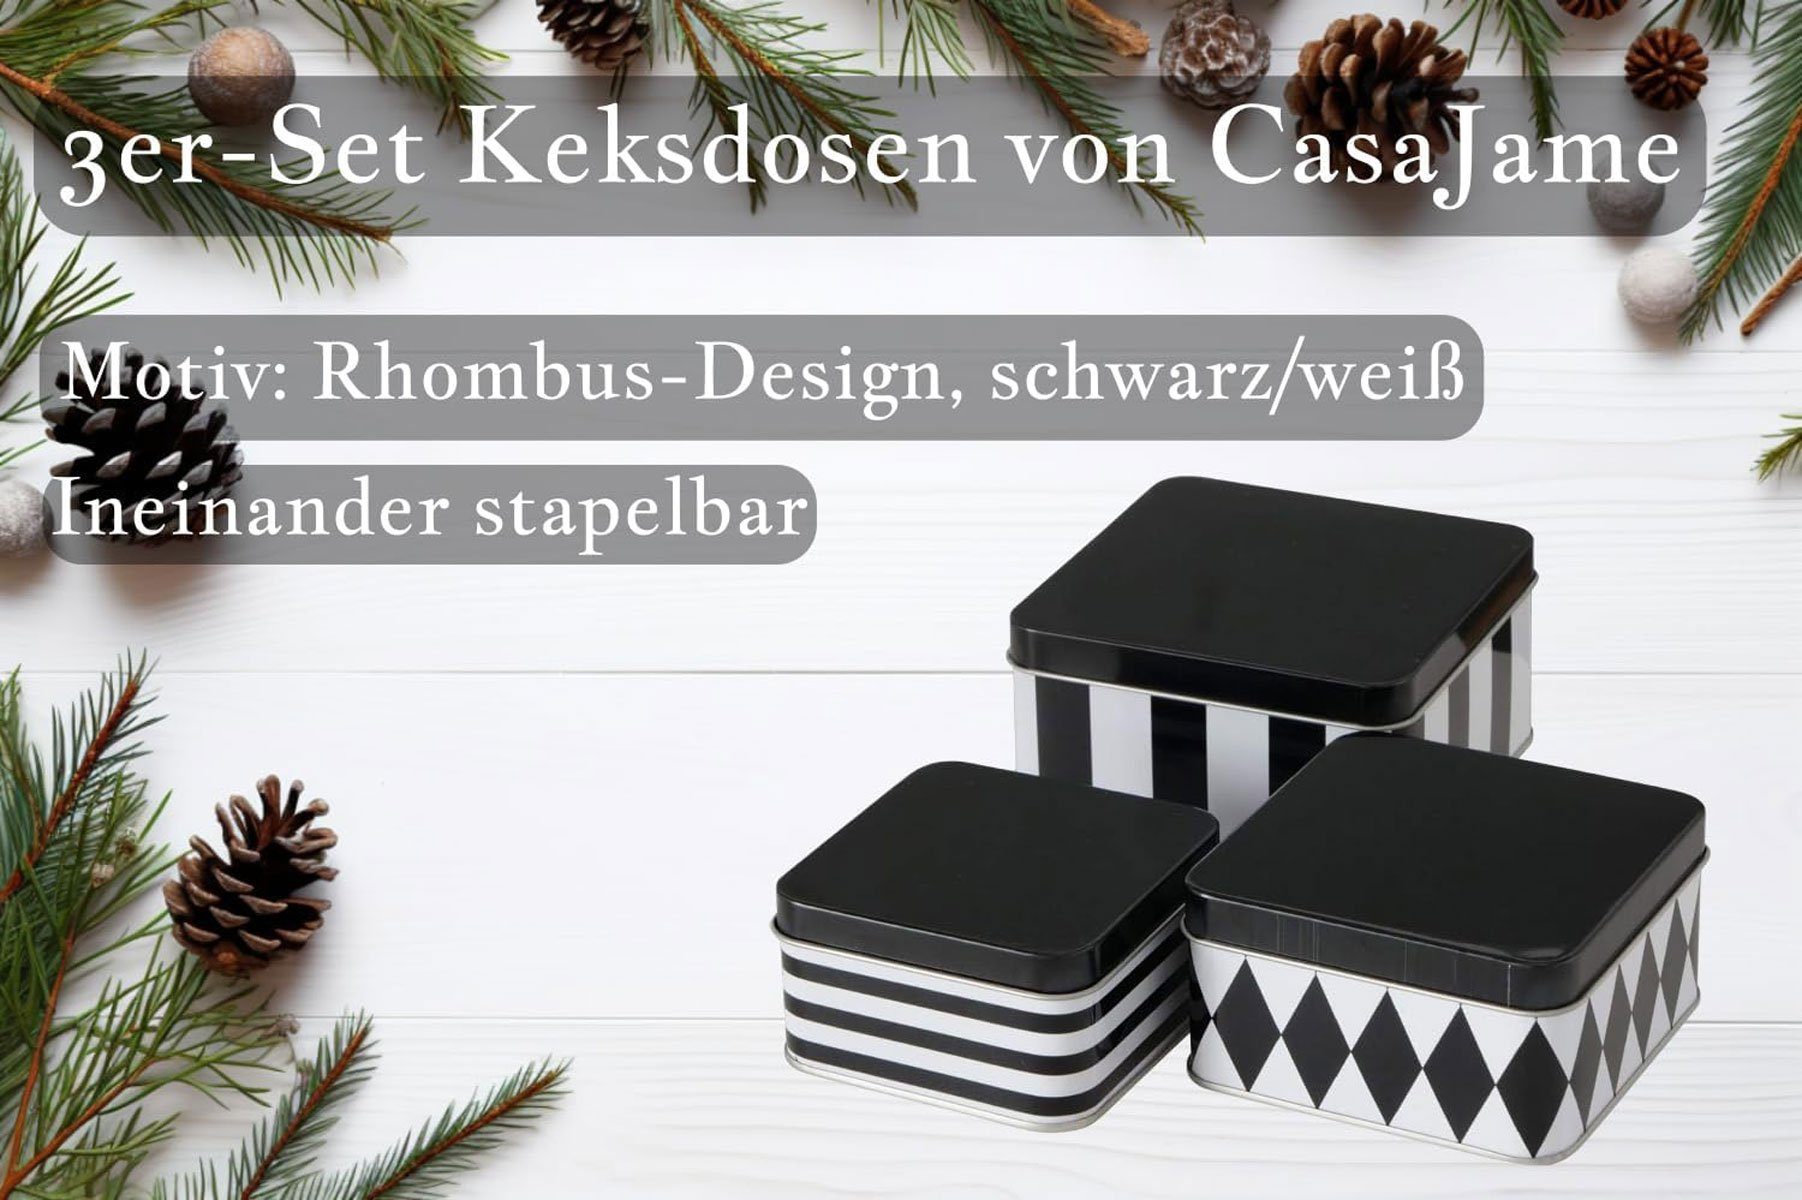 GRUPPE Schwarz-Weiß BOLTZE GmbH Eckig, Keksdosen, Metall Keksdose 3er Set Rhombus-Design V13